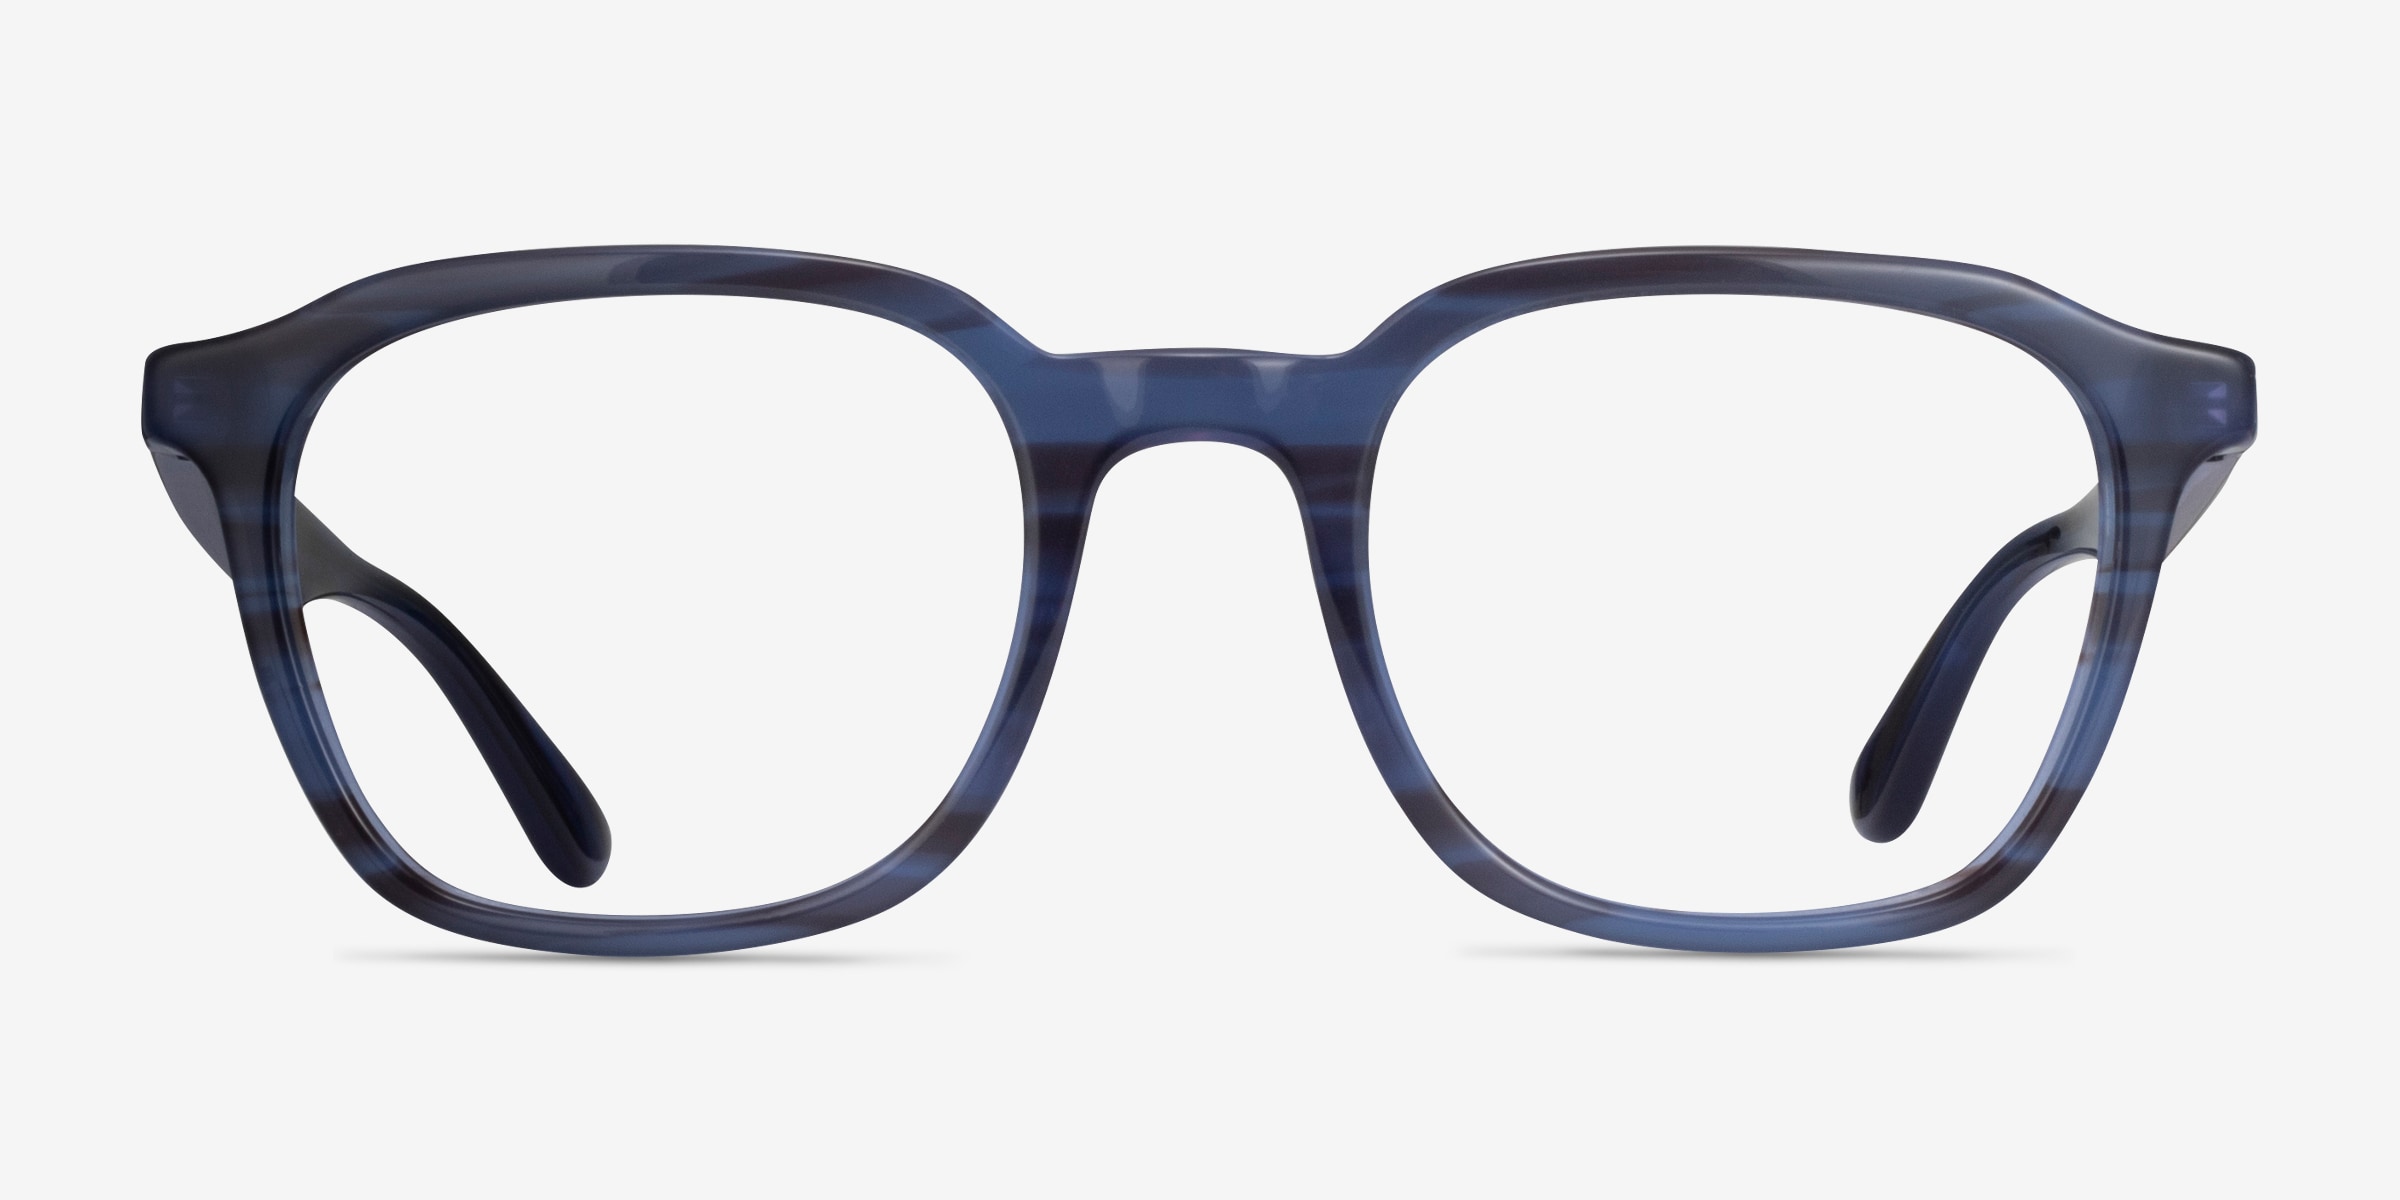 Ray-Ban RB5390 - Square Striped Blue Frame Eyeglasses | Eyebuydirect